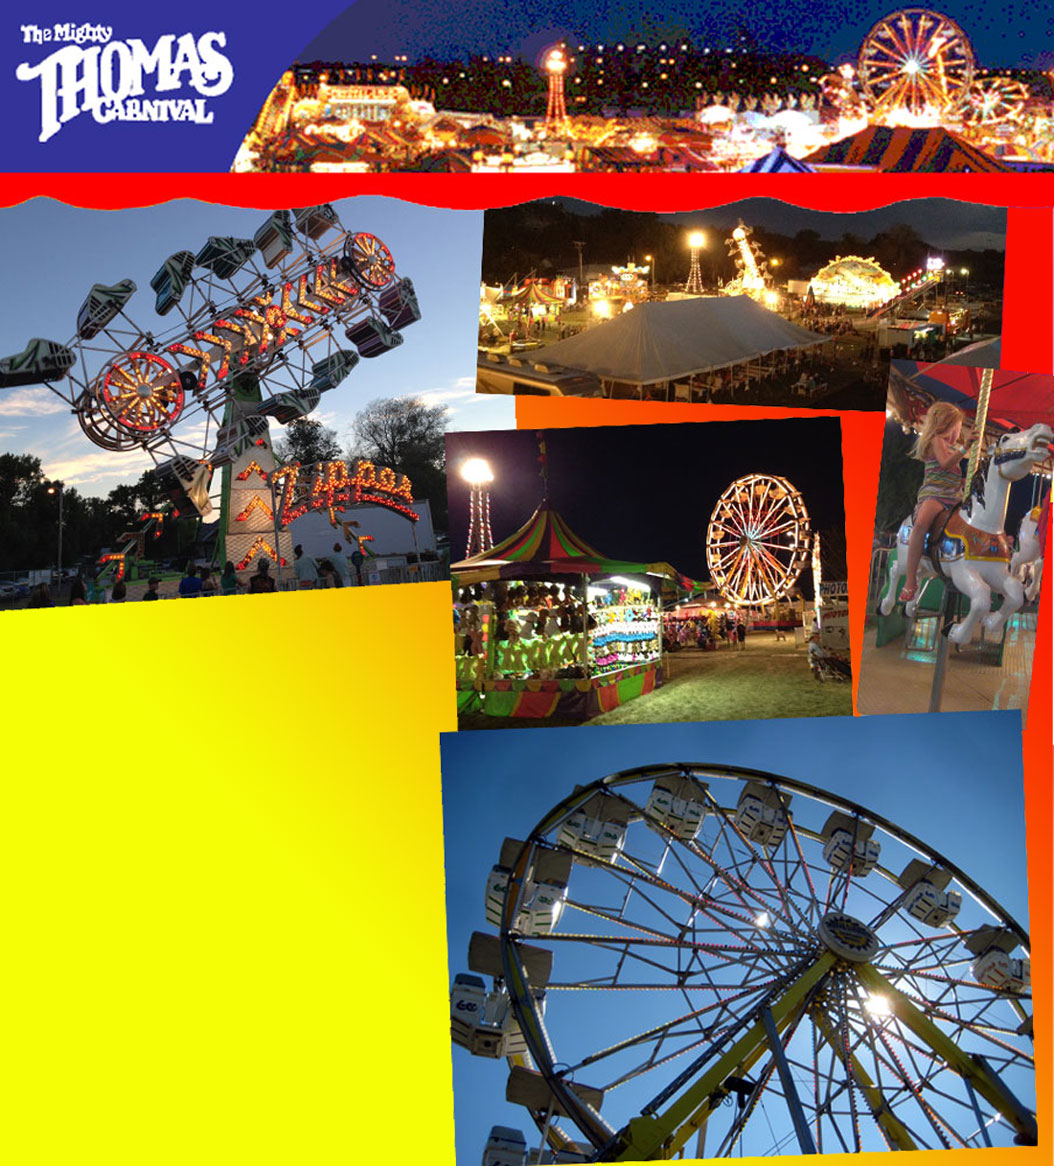 Rosebud-Treasure County Fair - The Mighty Thomas Carnival